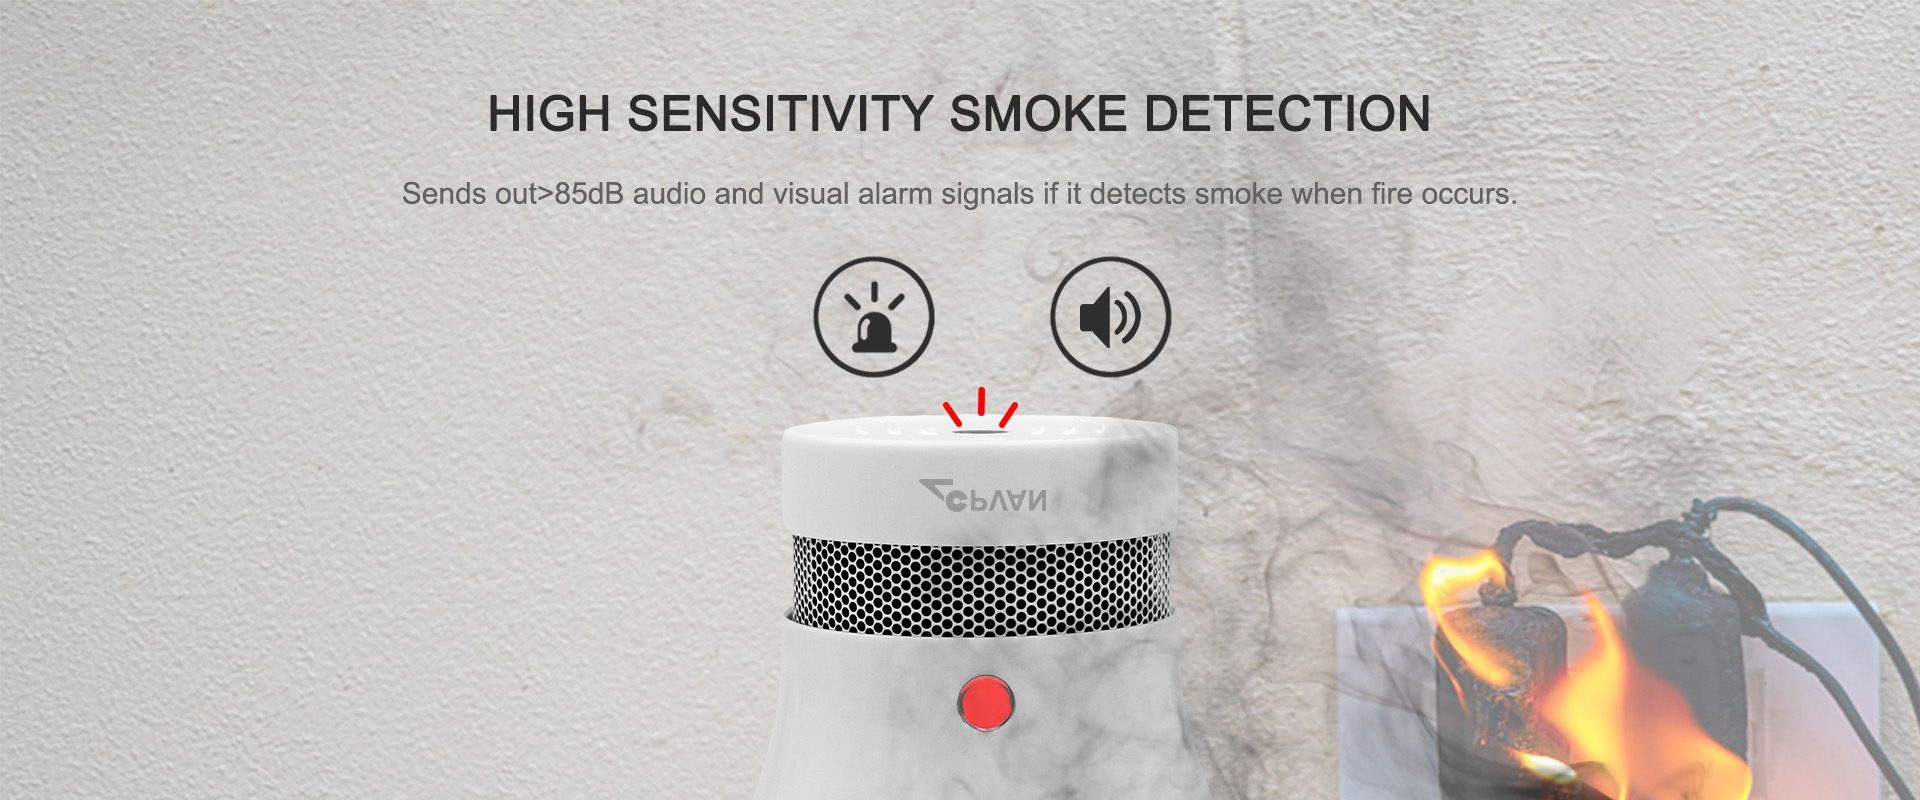 WIFI Smoke Detector